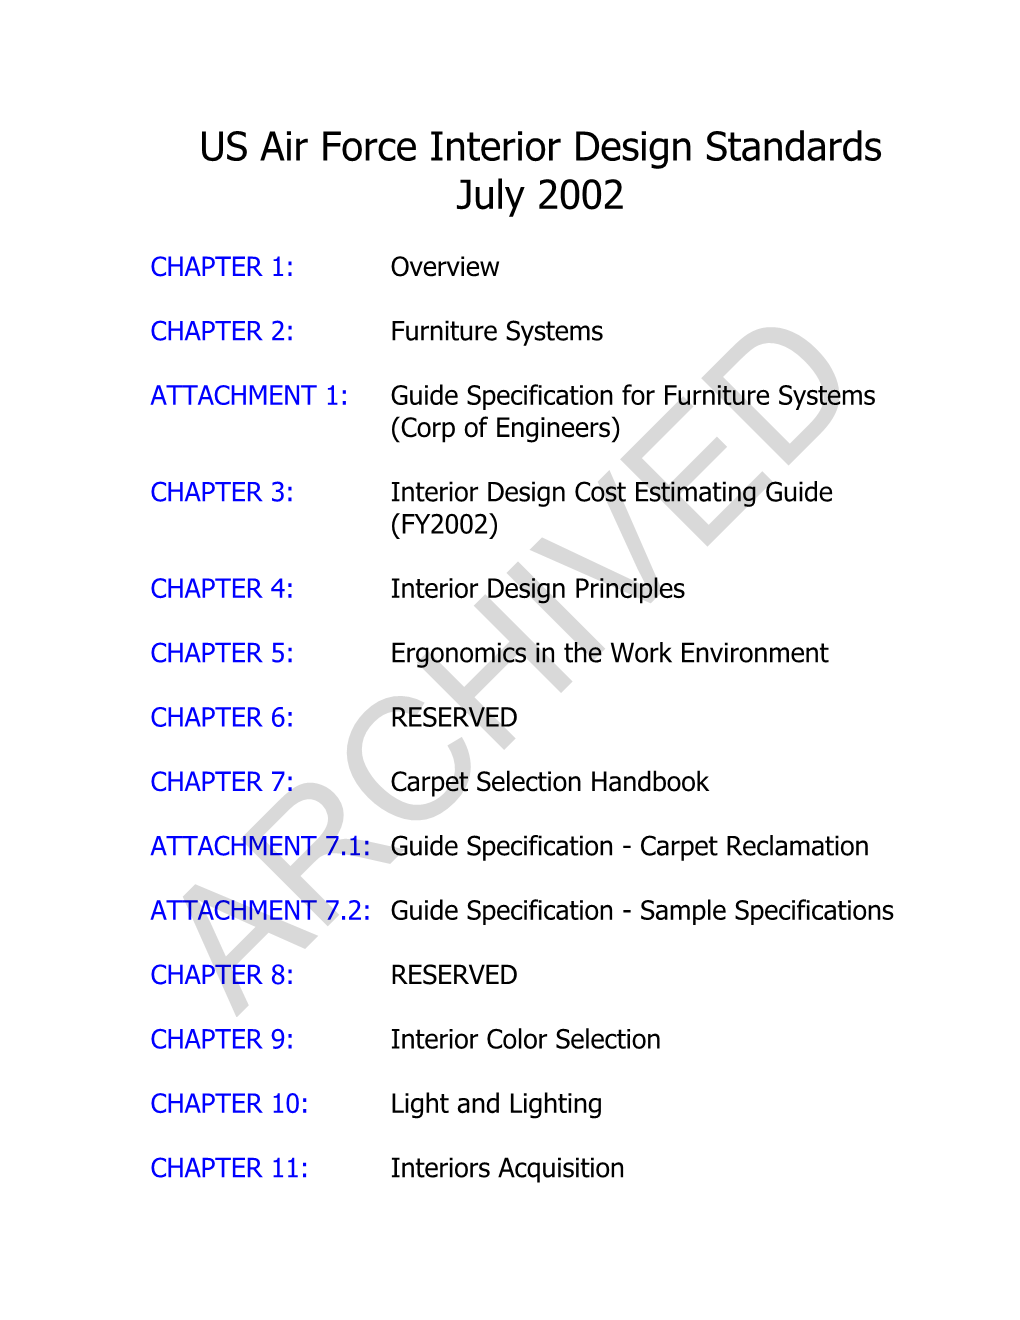 US Air Force Interior Design Standards July 2002